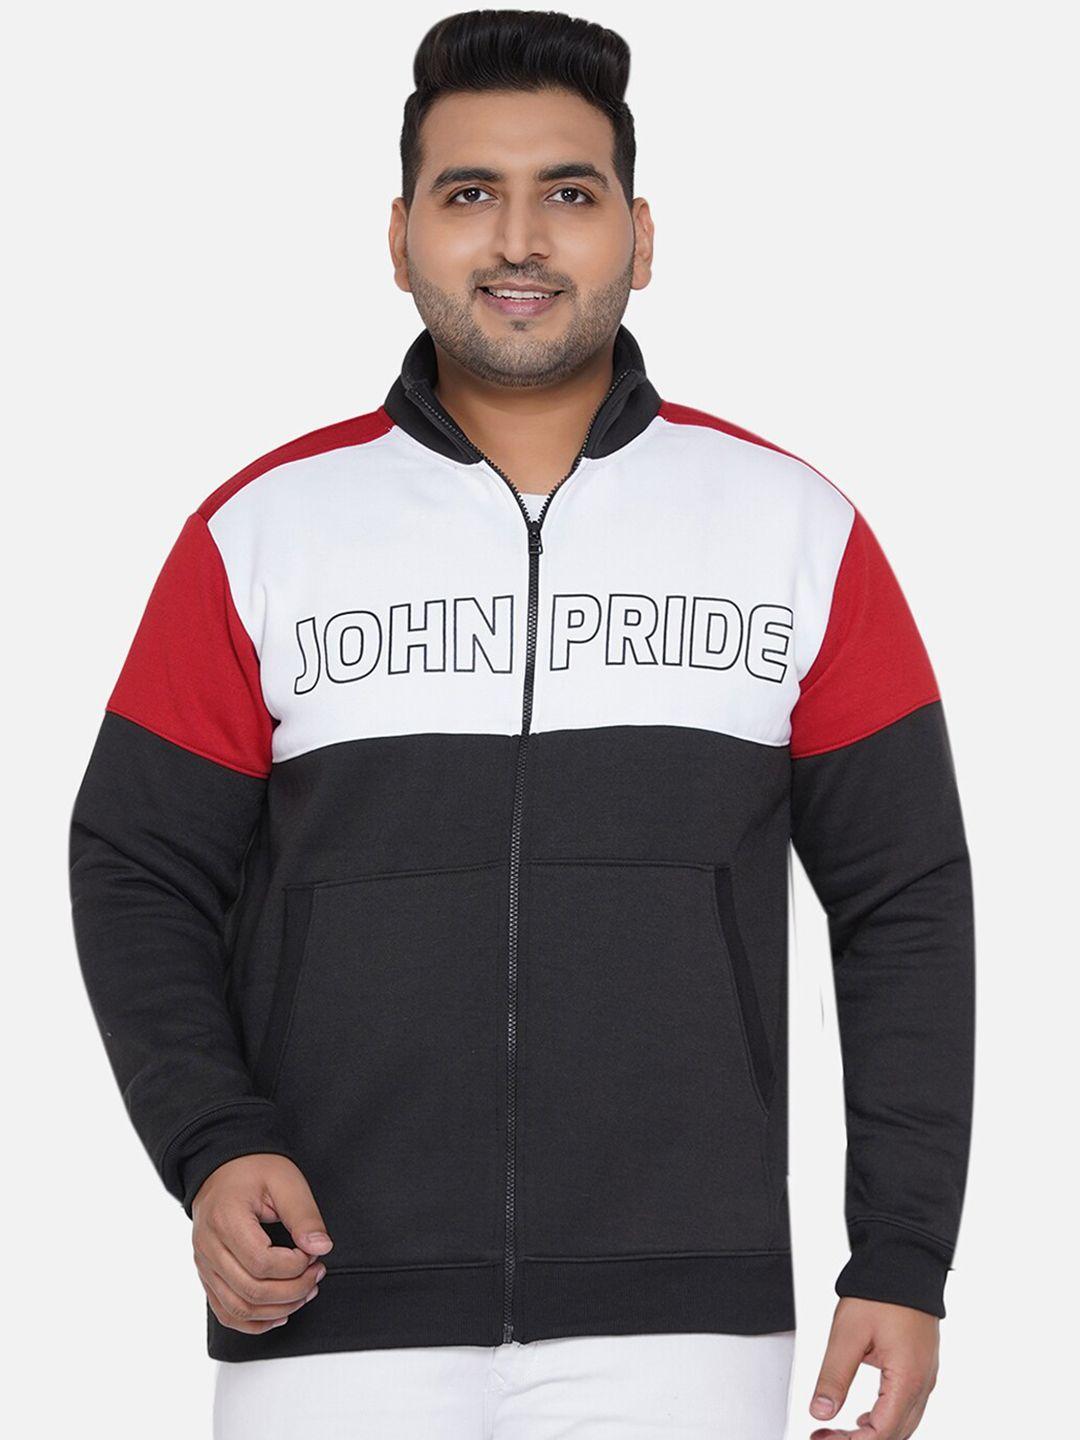 john pride plus size men black & red colourblocked sweatshirt